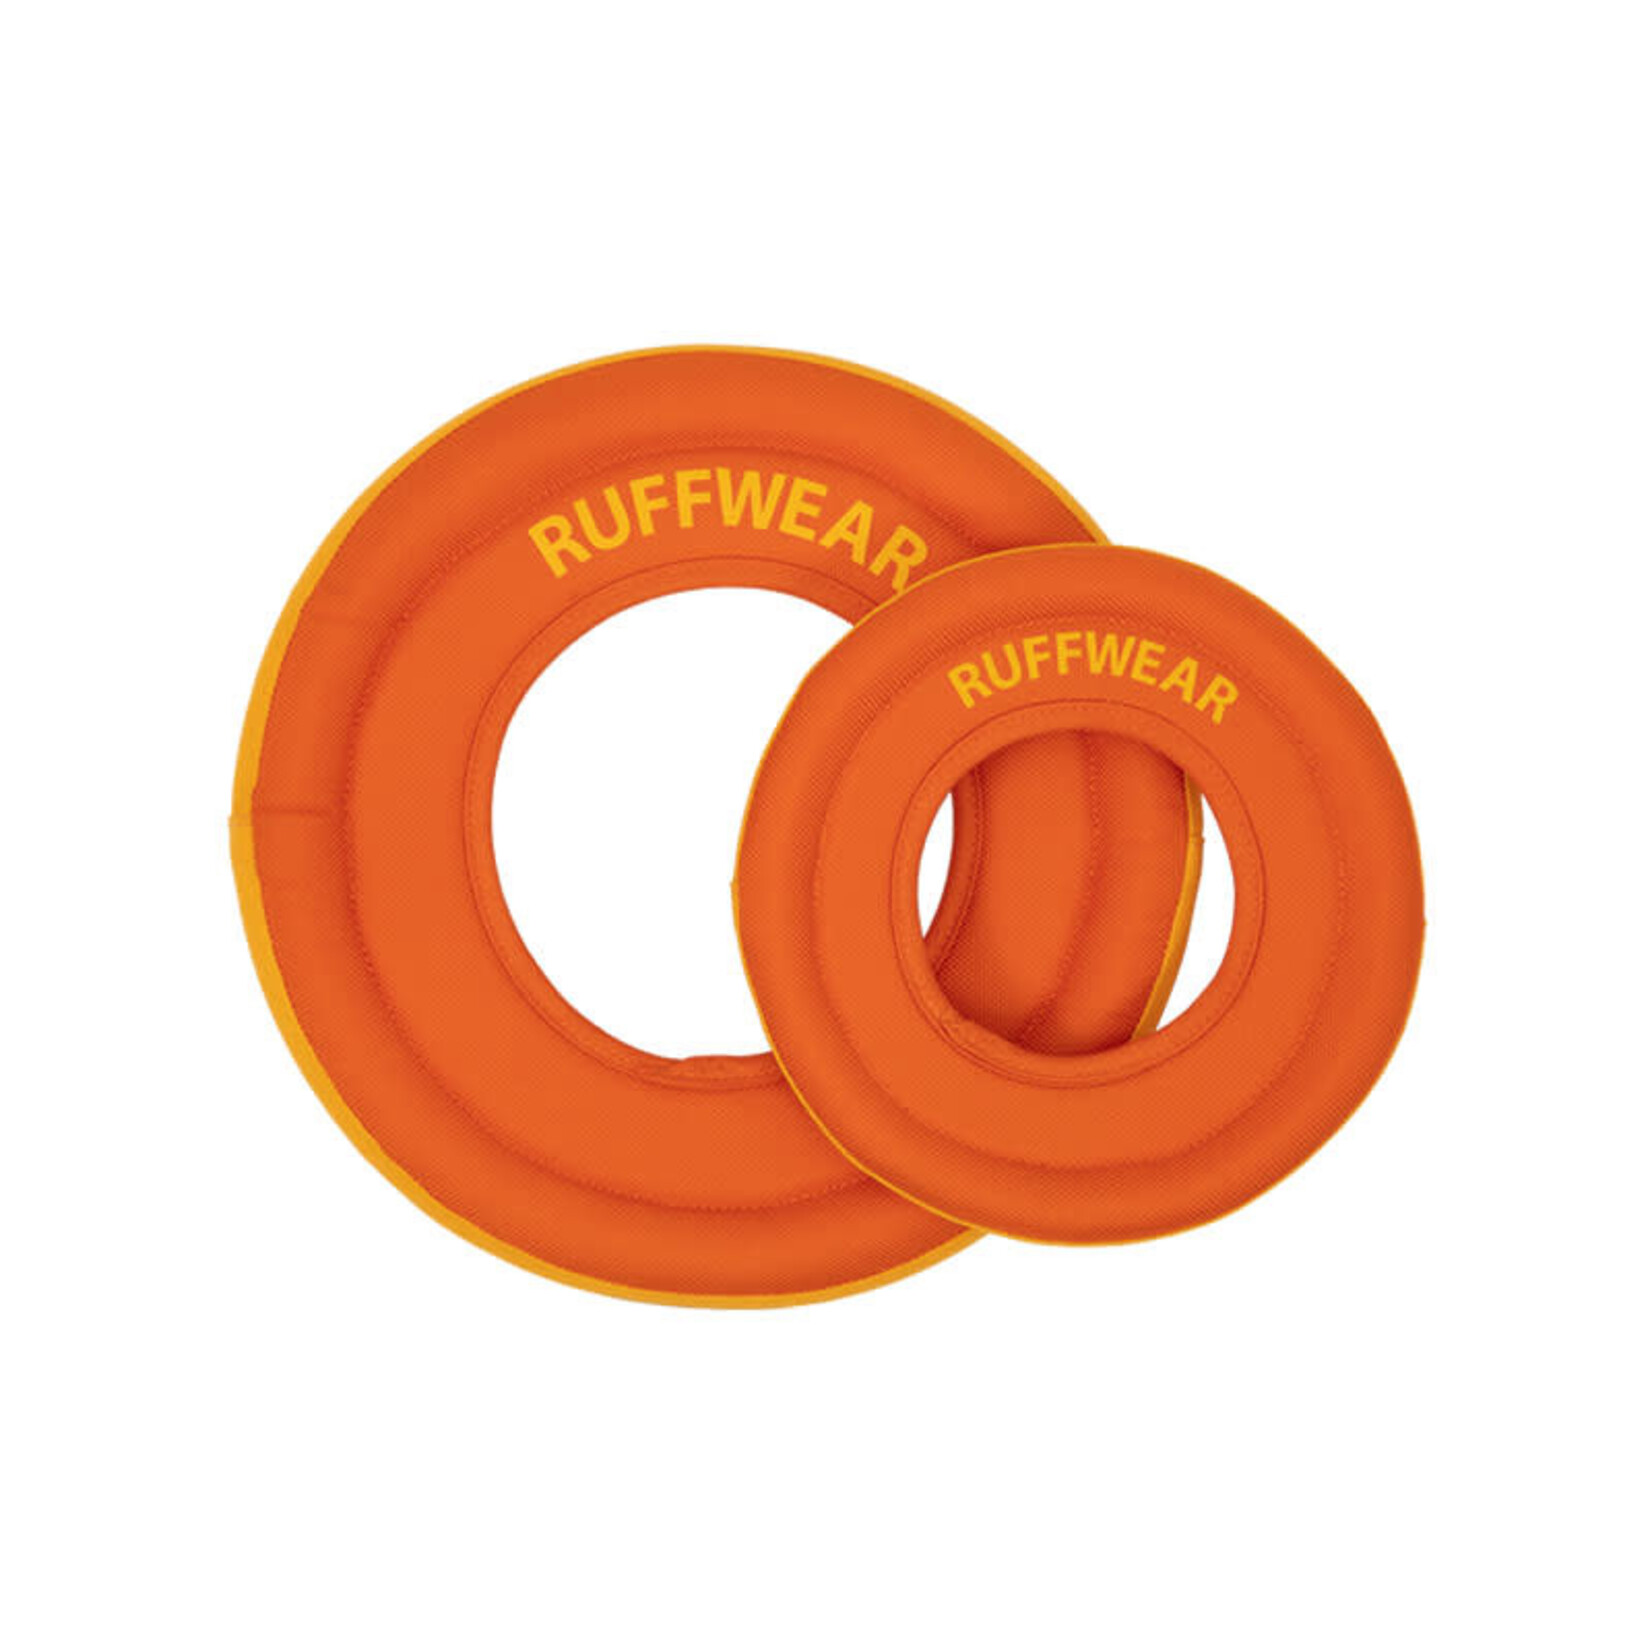 Ruffwear Ruffwear - Hydro Plane - Campfire Orange